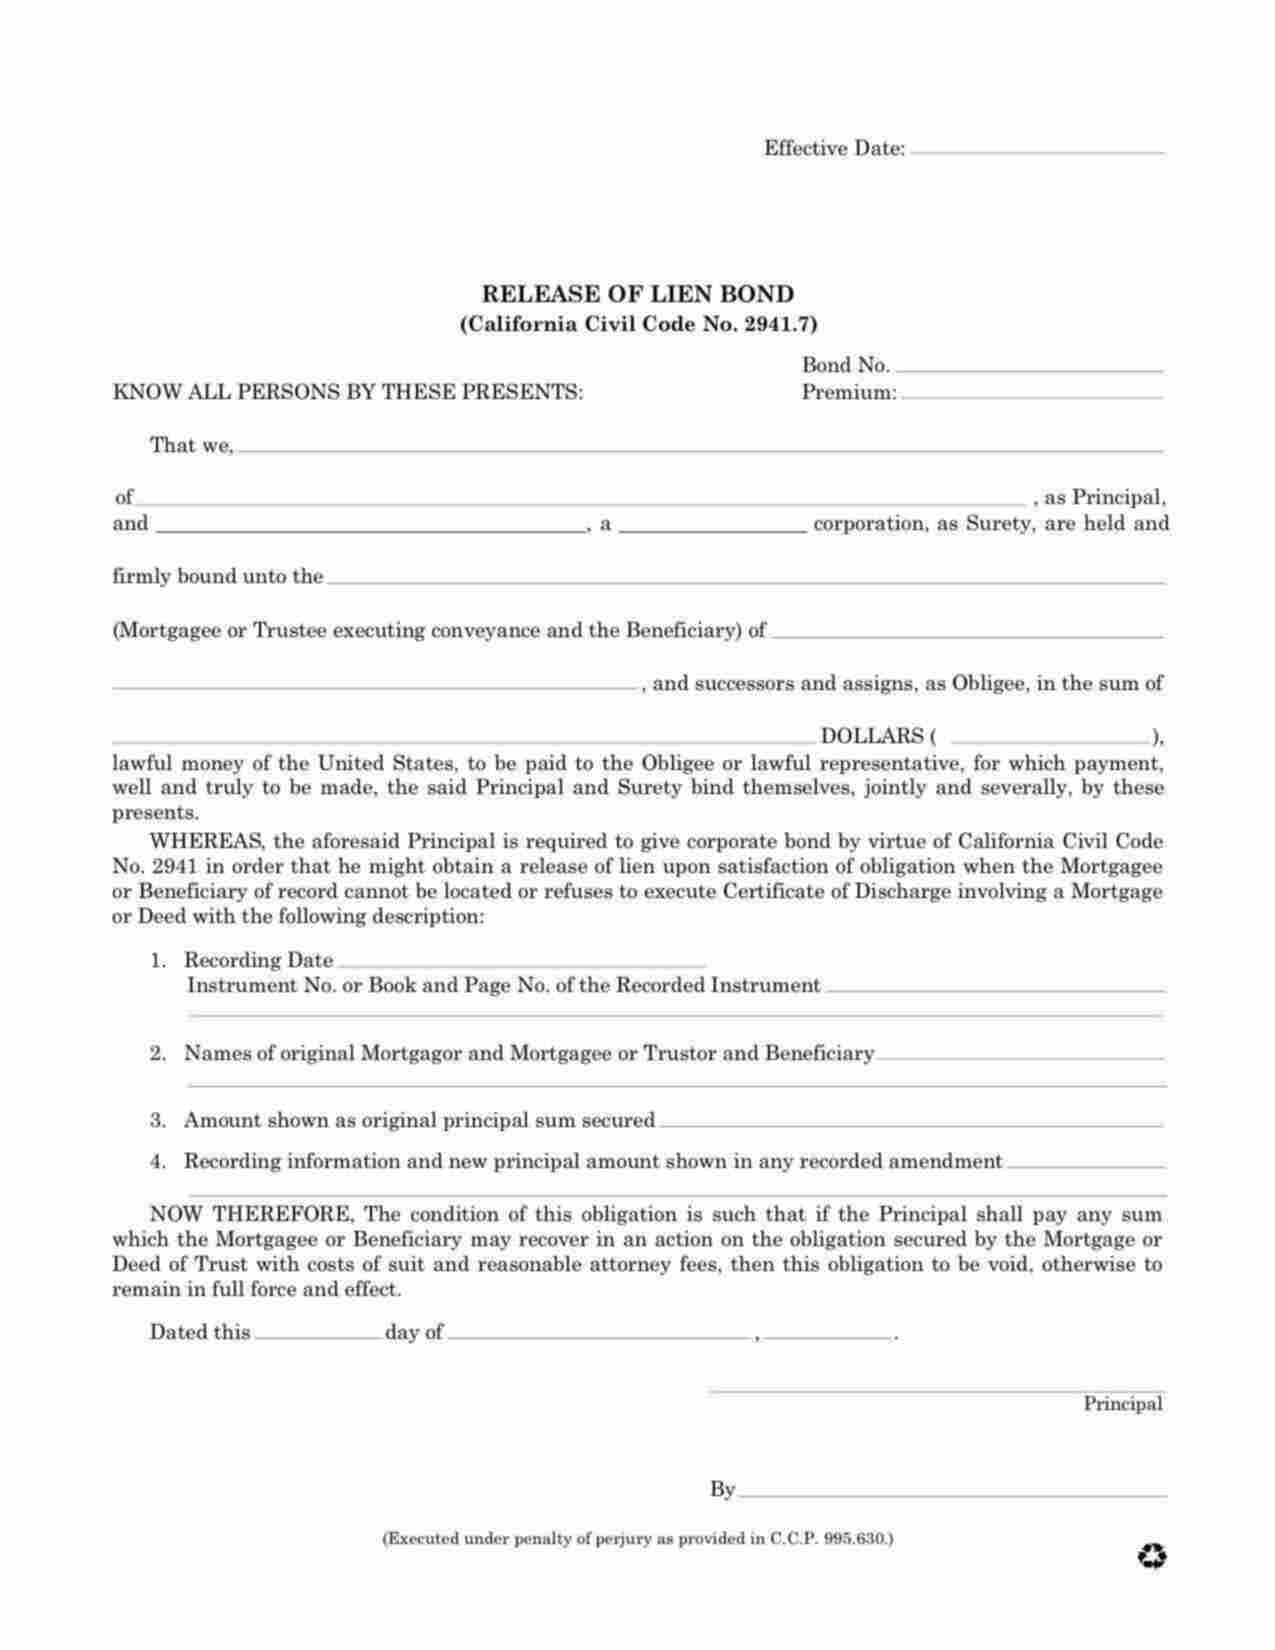 California Release of Lien Bond Form